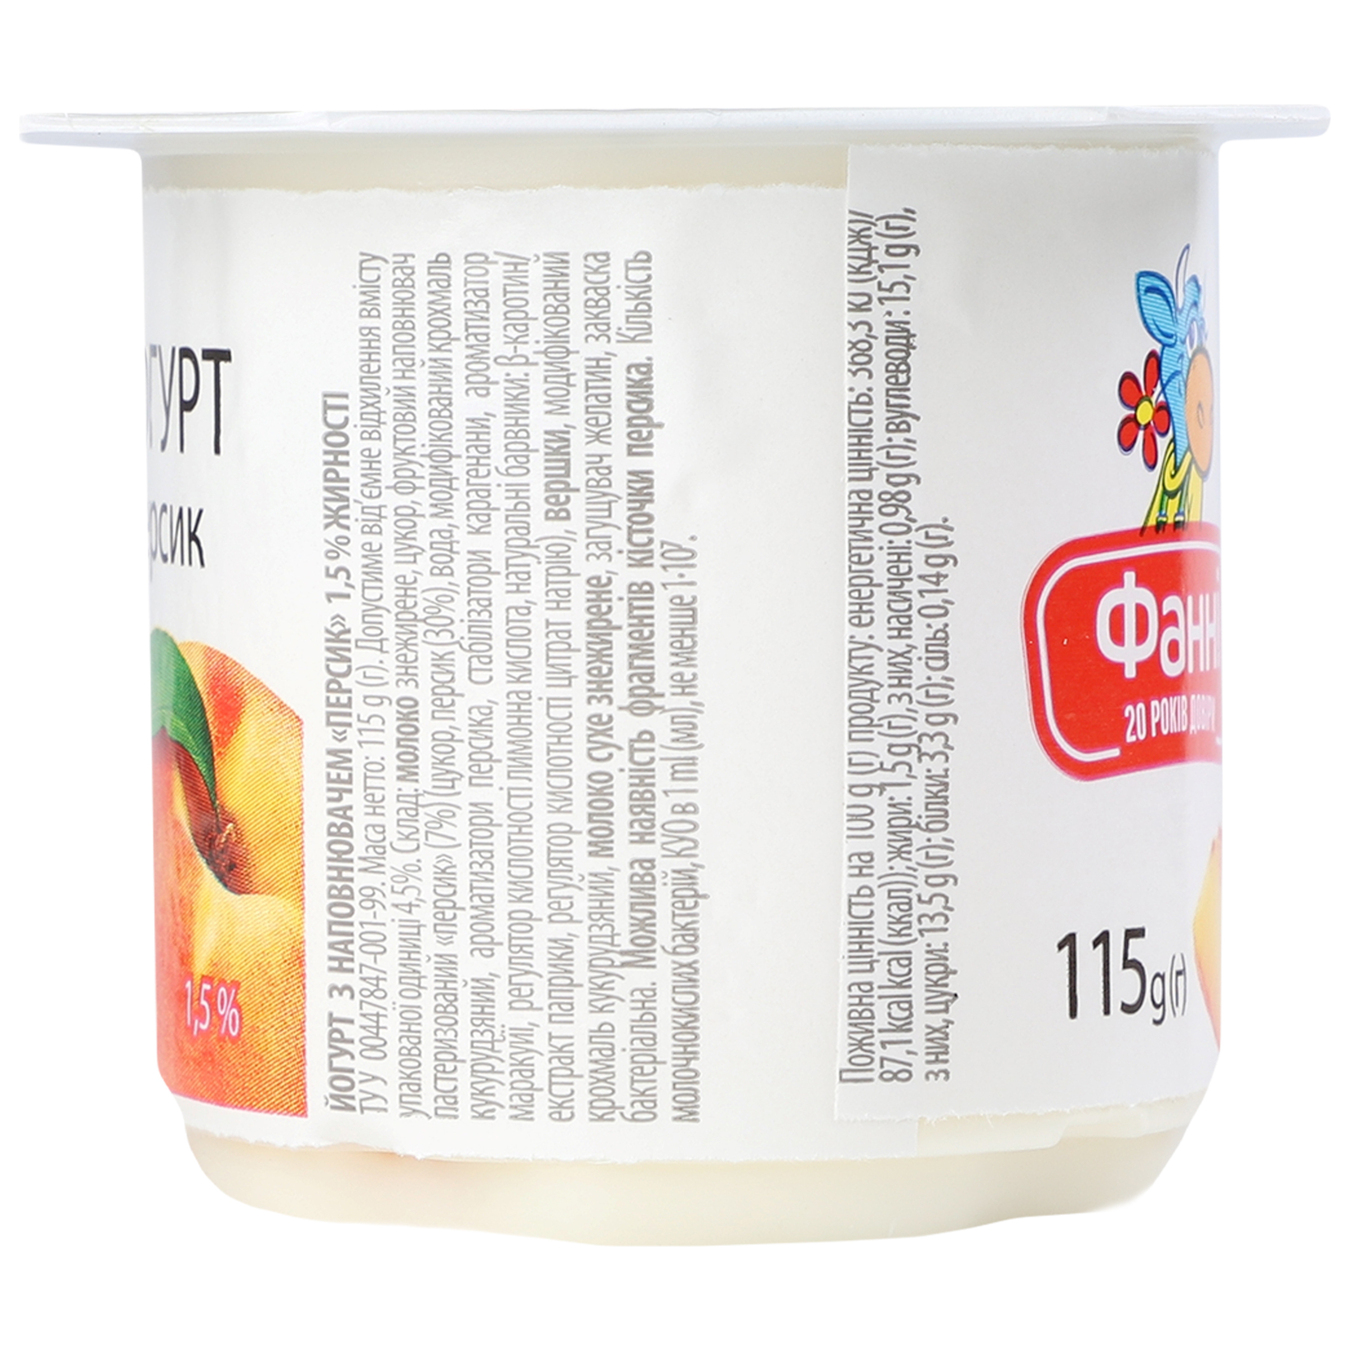 Fanny yogurt with peach filling cup 1.5% 115g 5